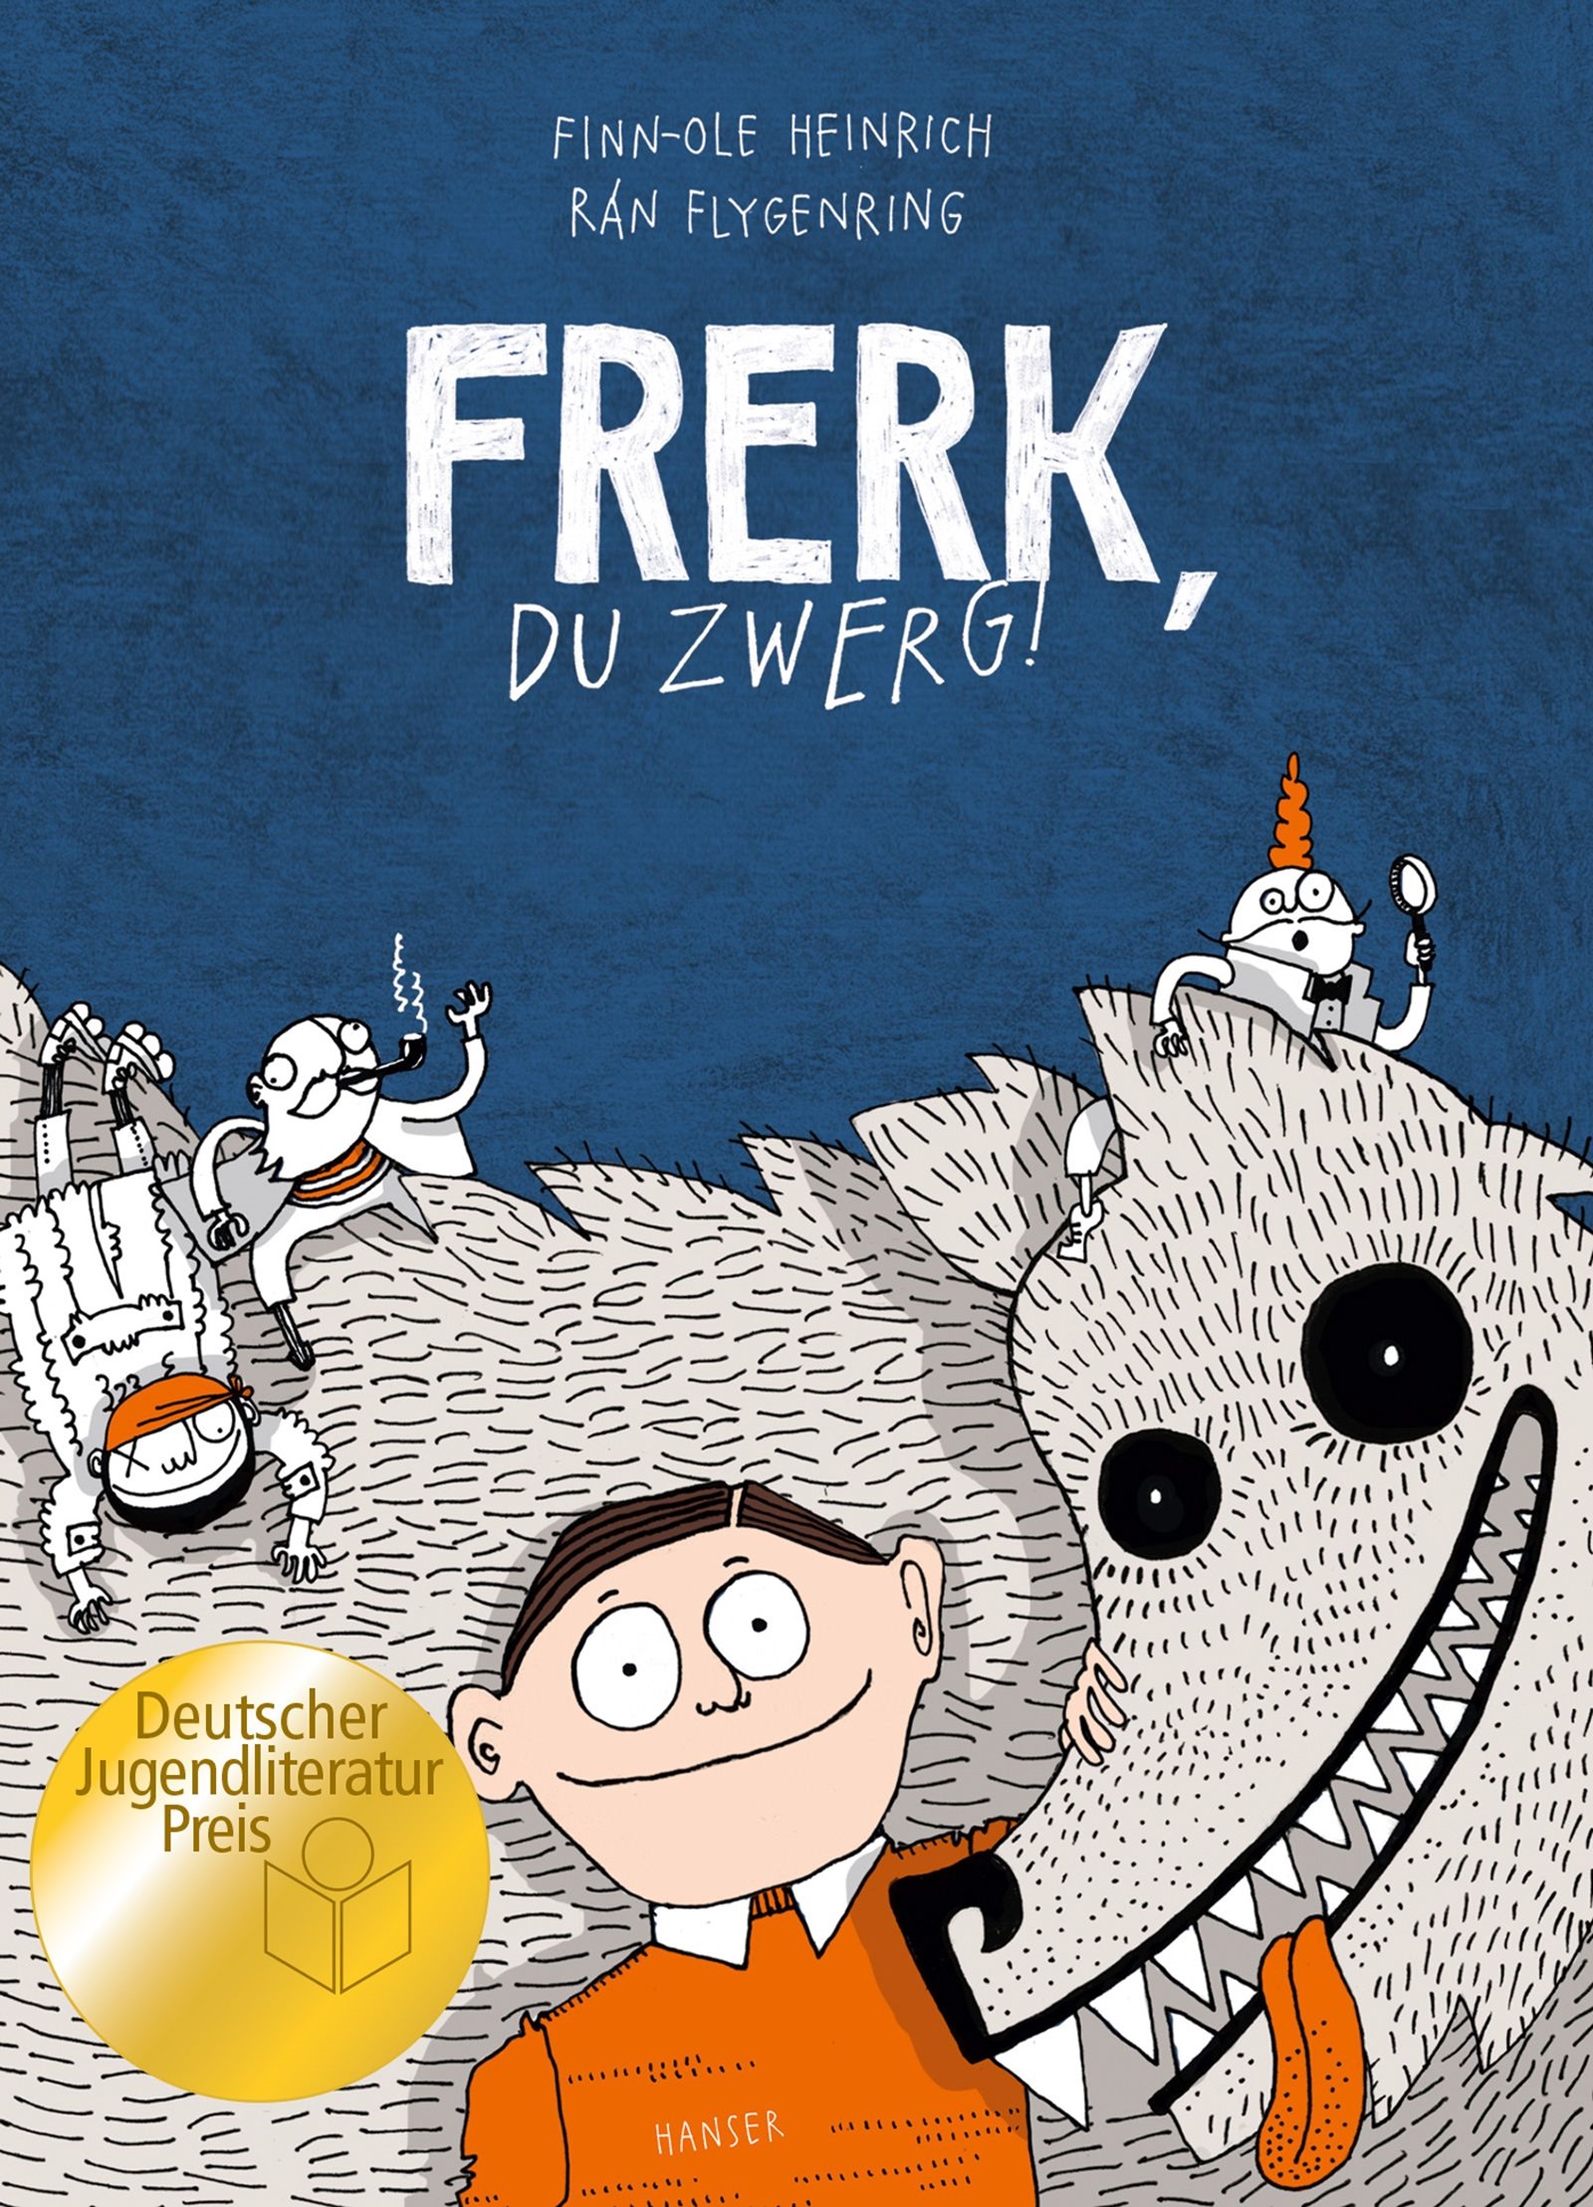 Frerk the Dwarf